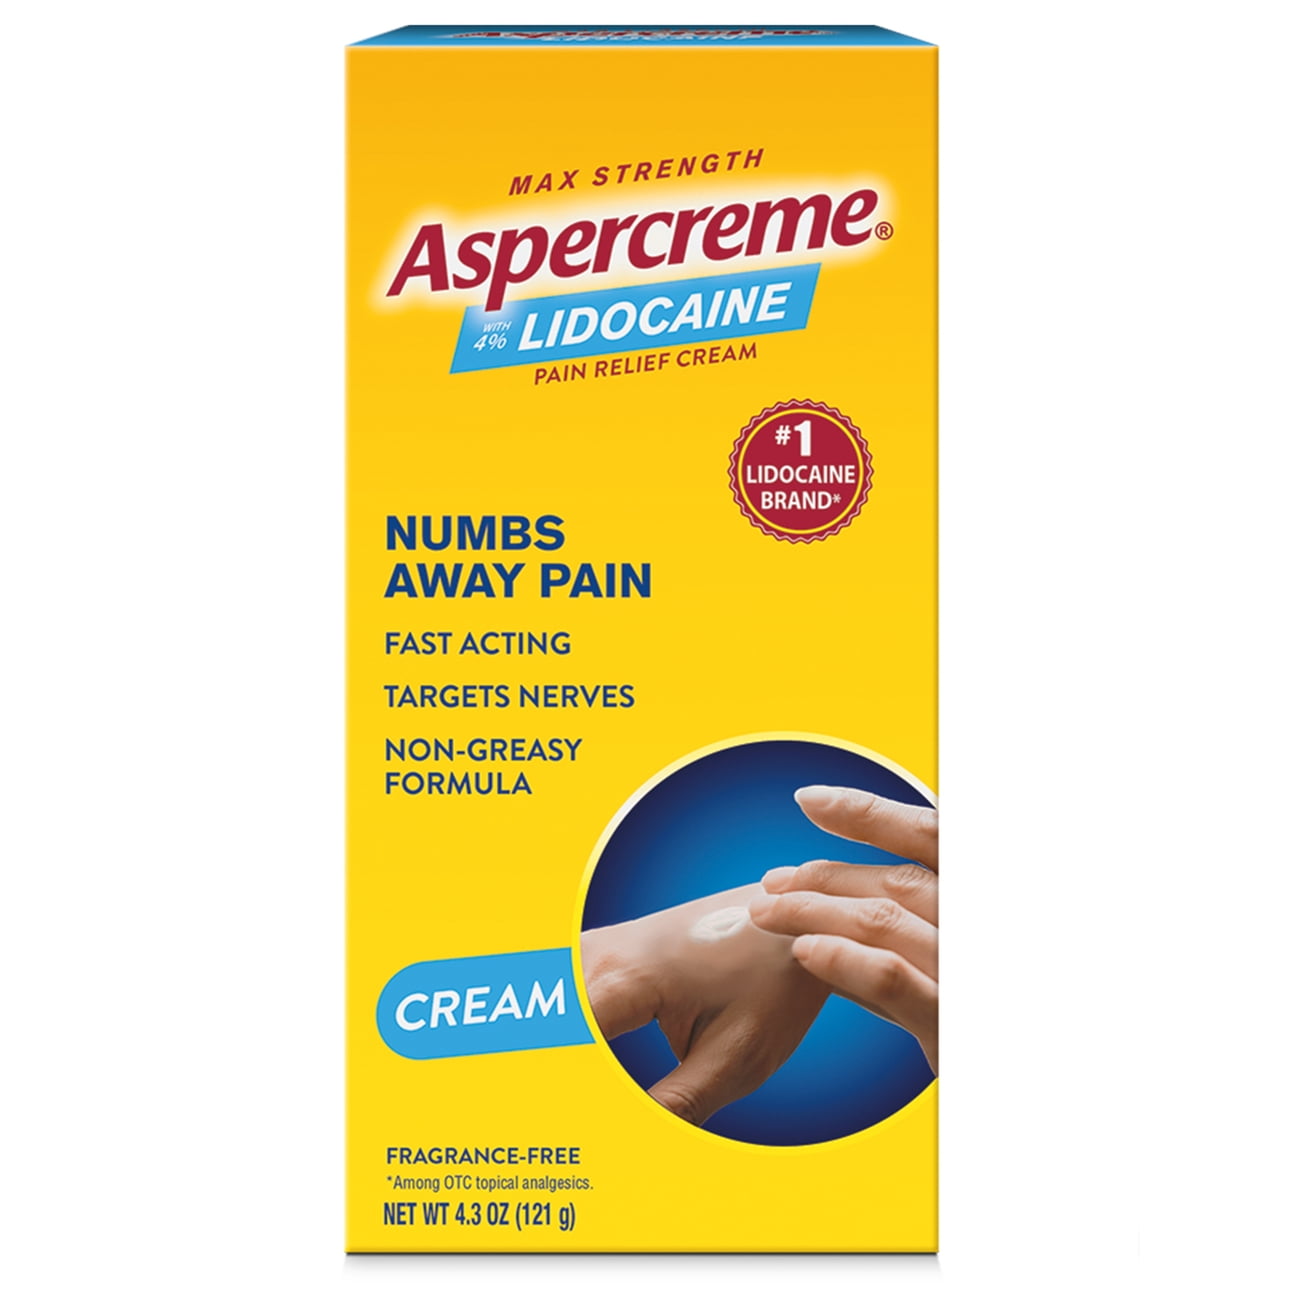 Aspercreme with Lidocaine Maximum Strength Pain Relief Cream, 4.3 oz.